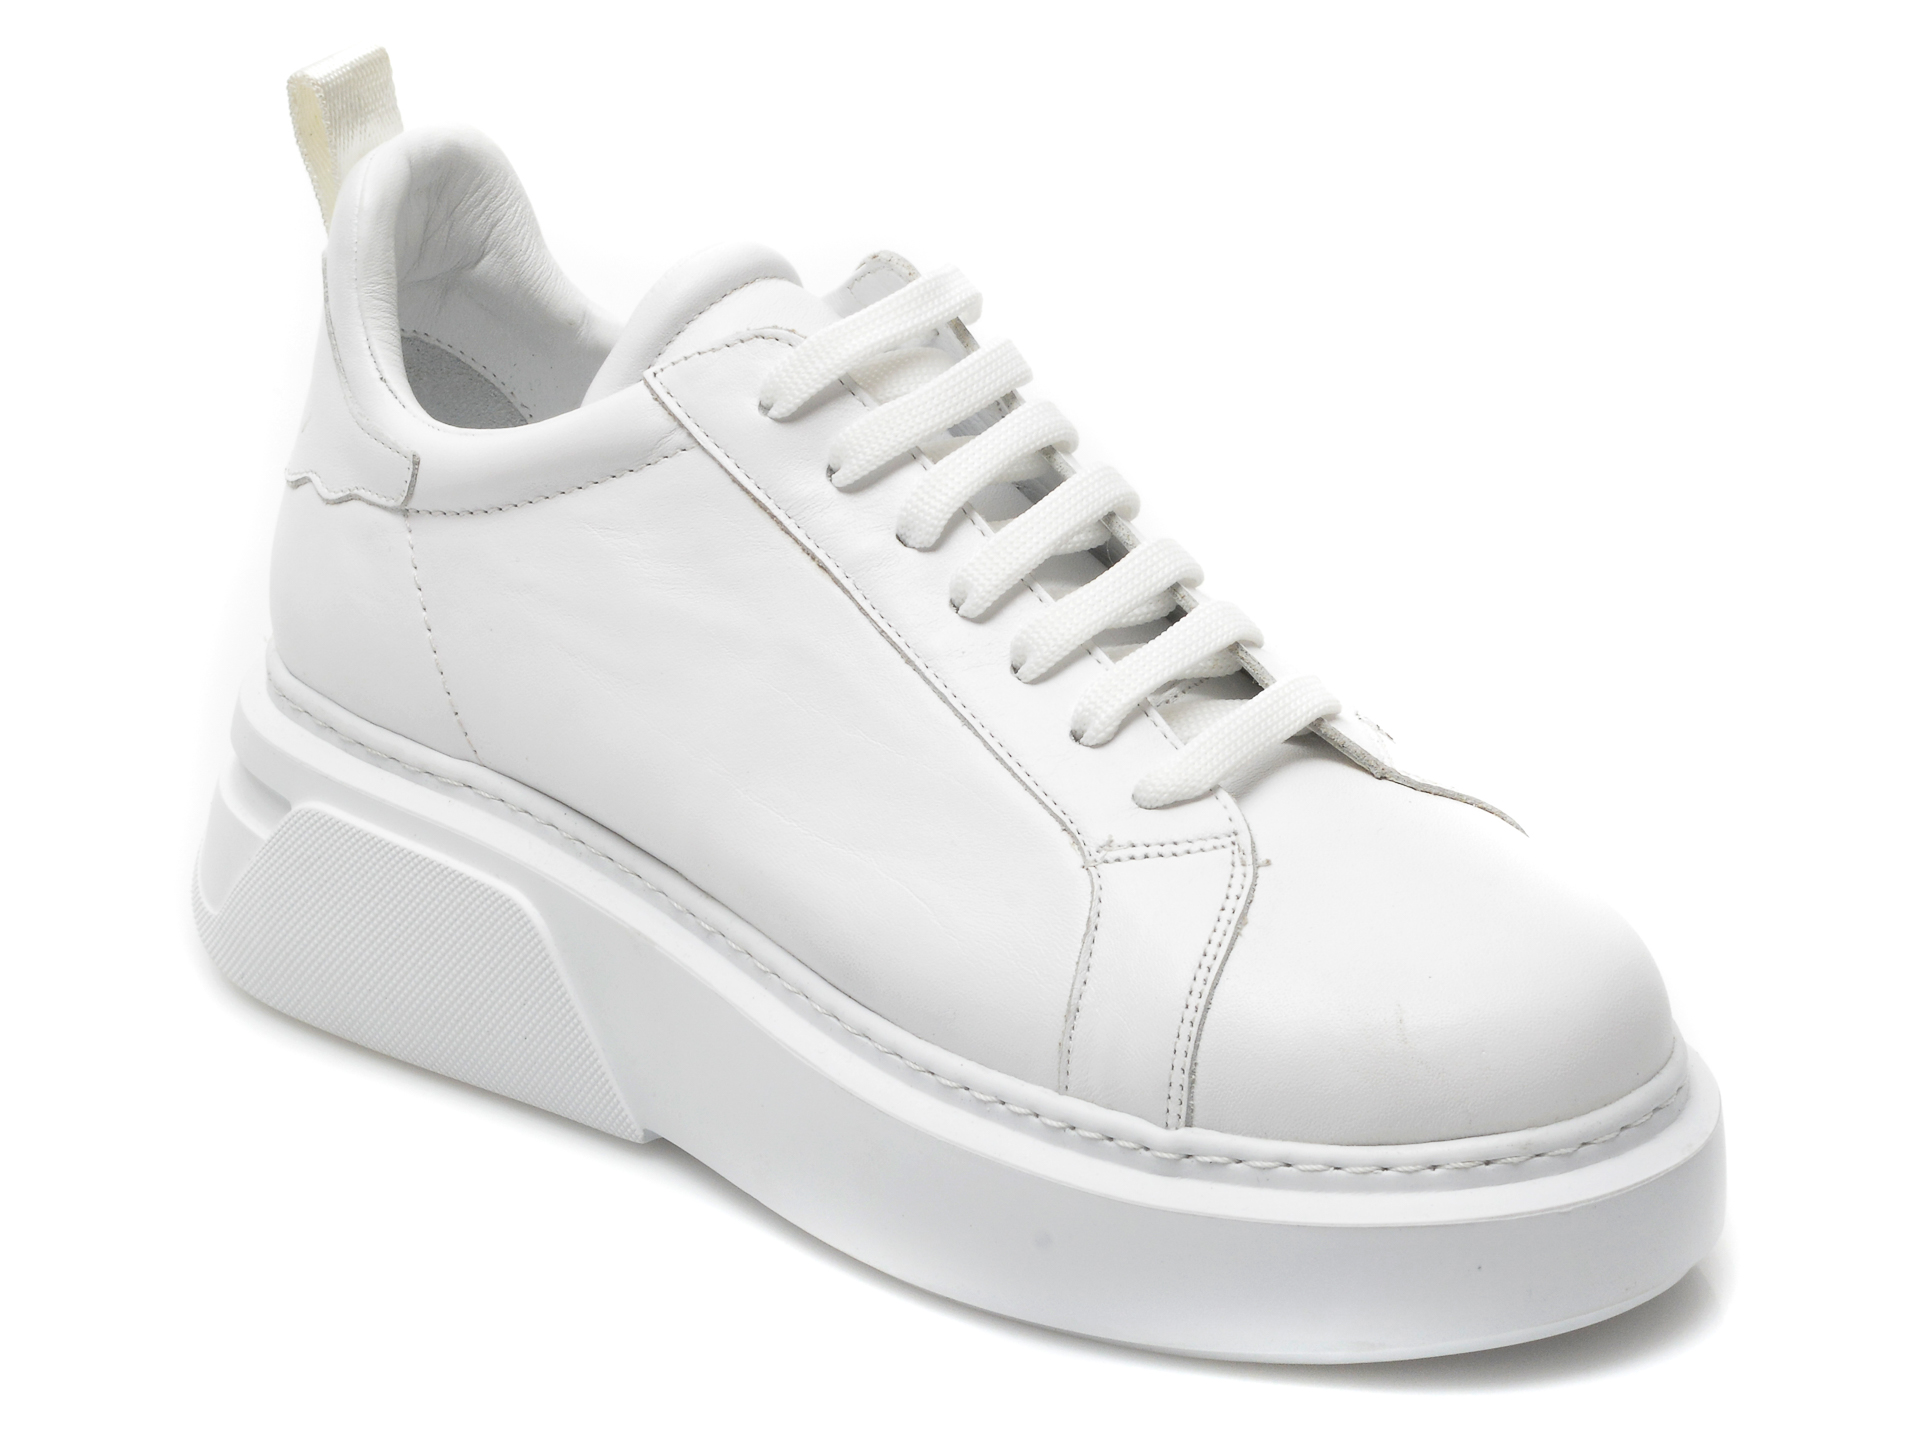 Pantofi sport MAGNOLYA albi, 2291, din piele naturala MAGNOLYA